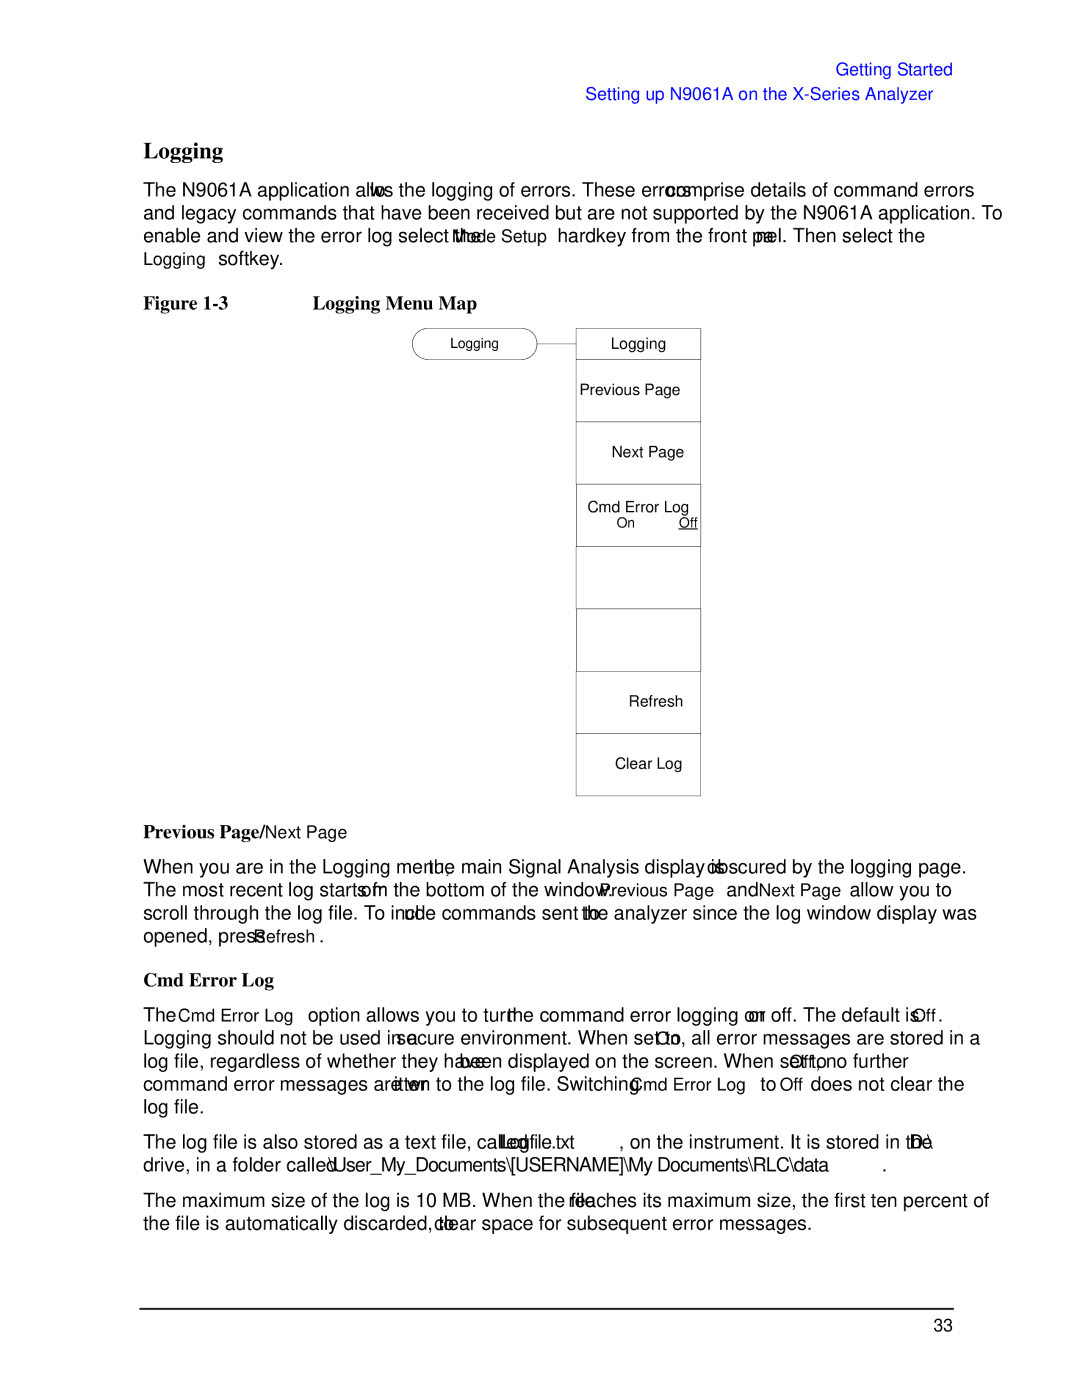 Agilent Technologies N9030a manual Previous Page/Next, Cmd Error Log 